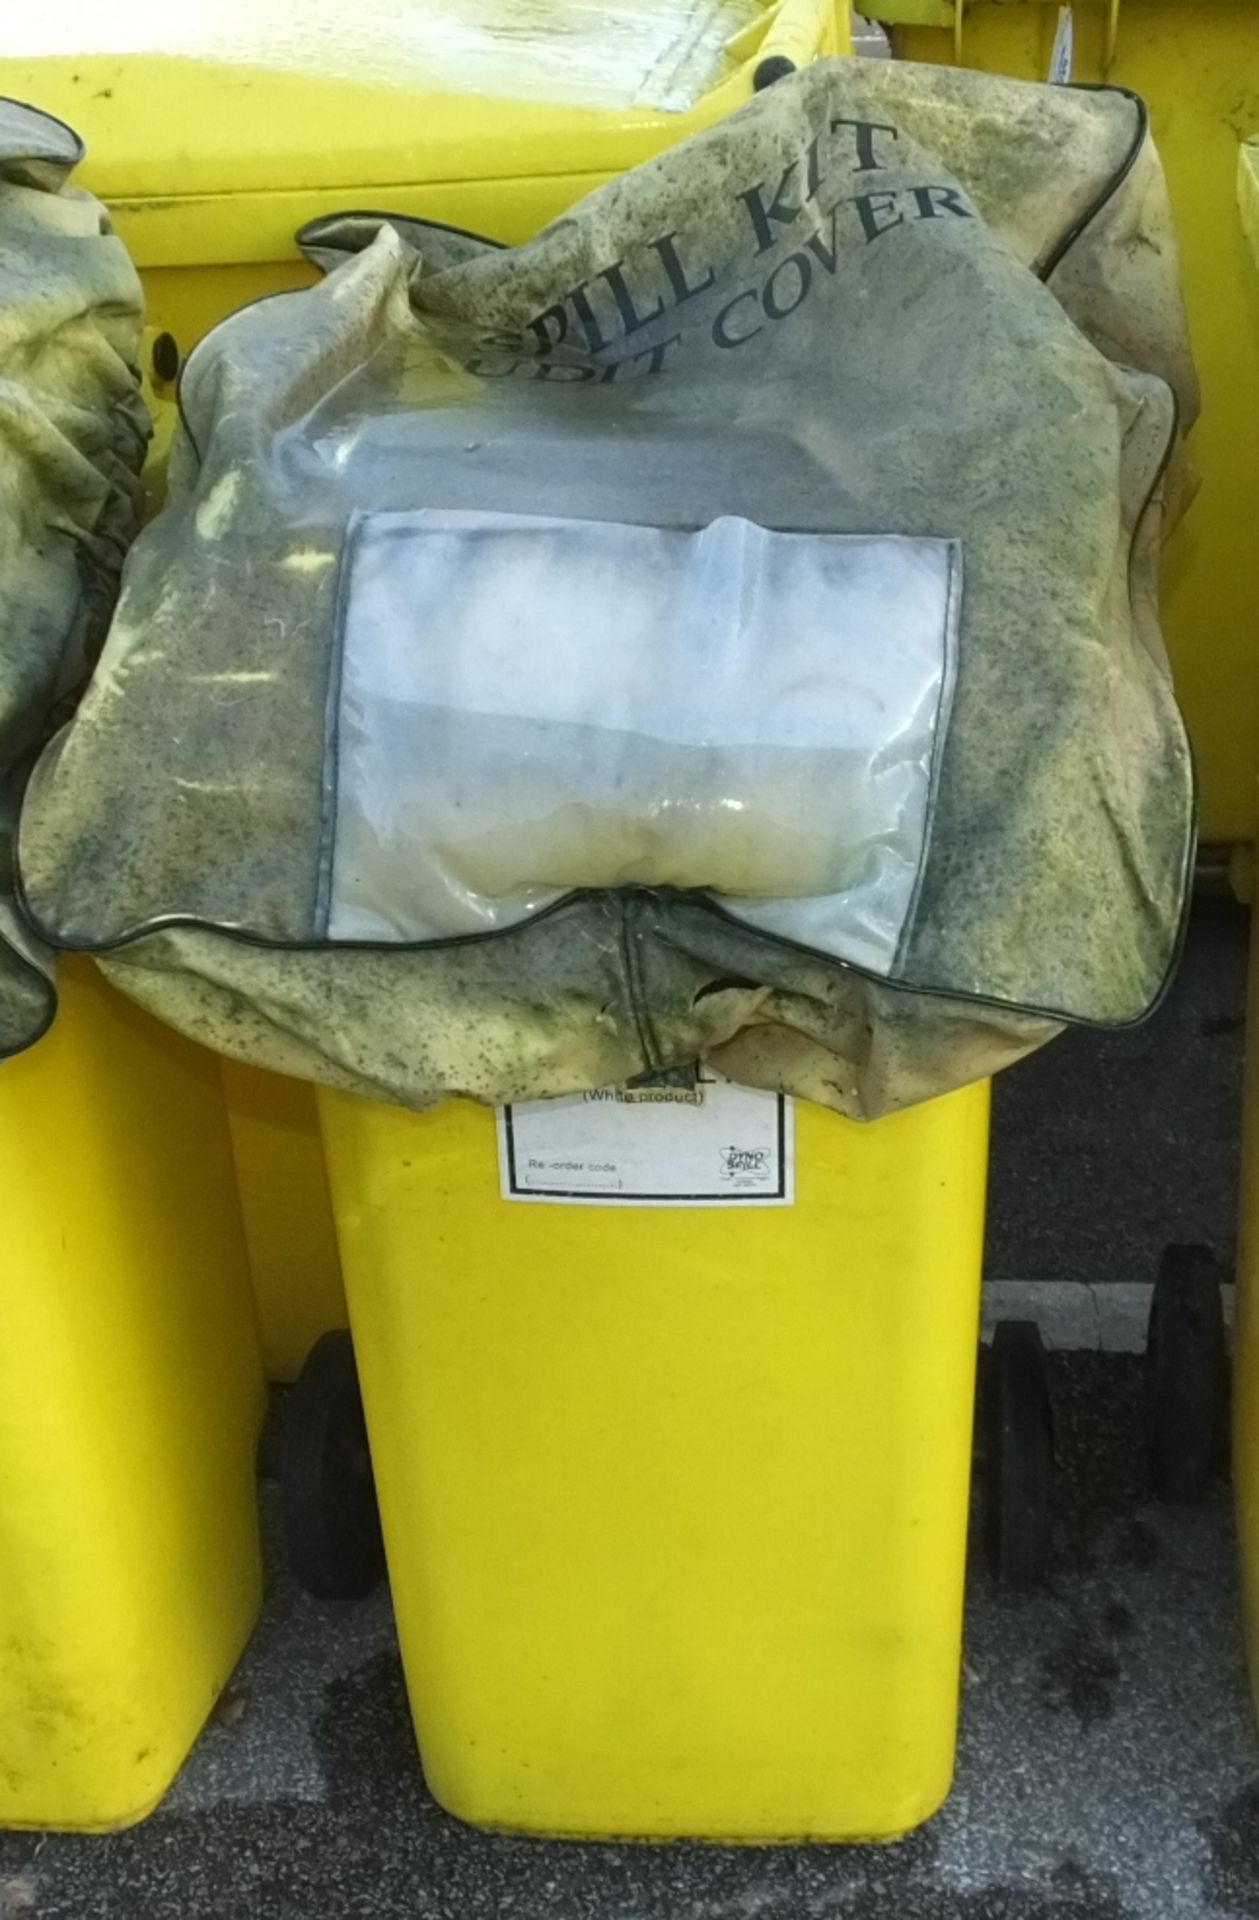 Chemical Spill Kit in Yellow Bin